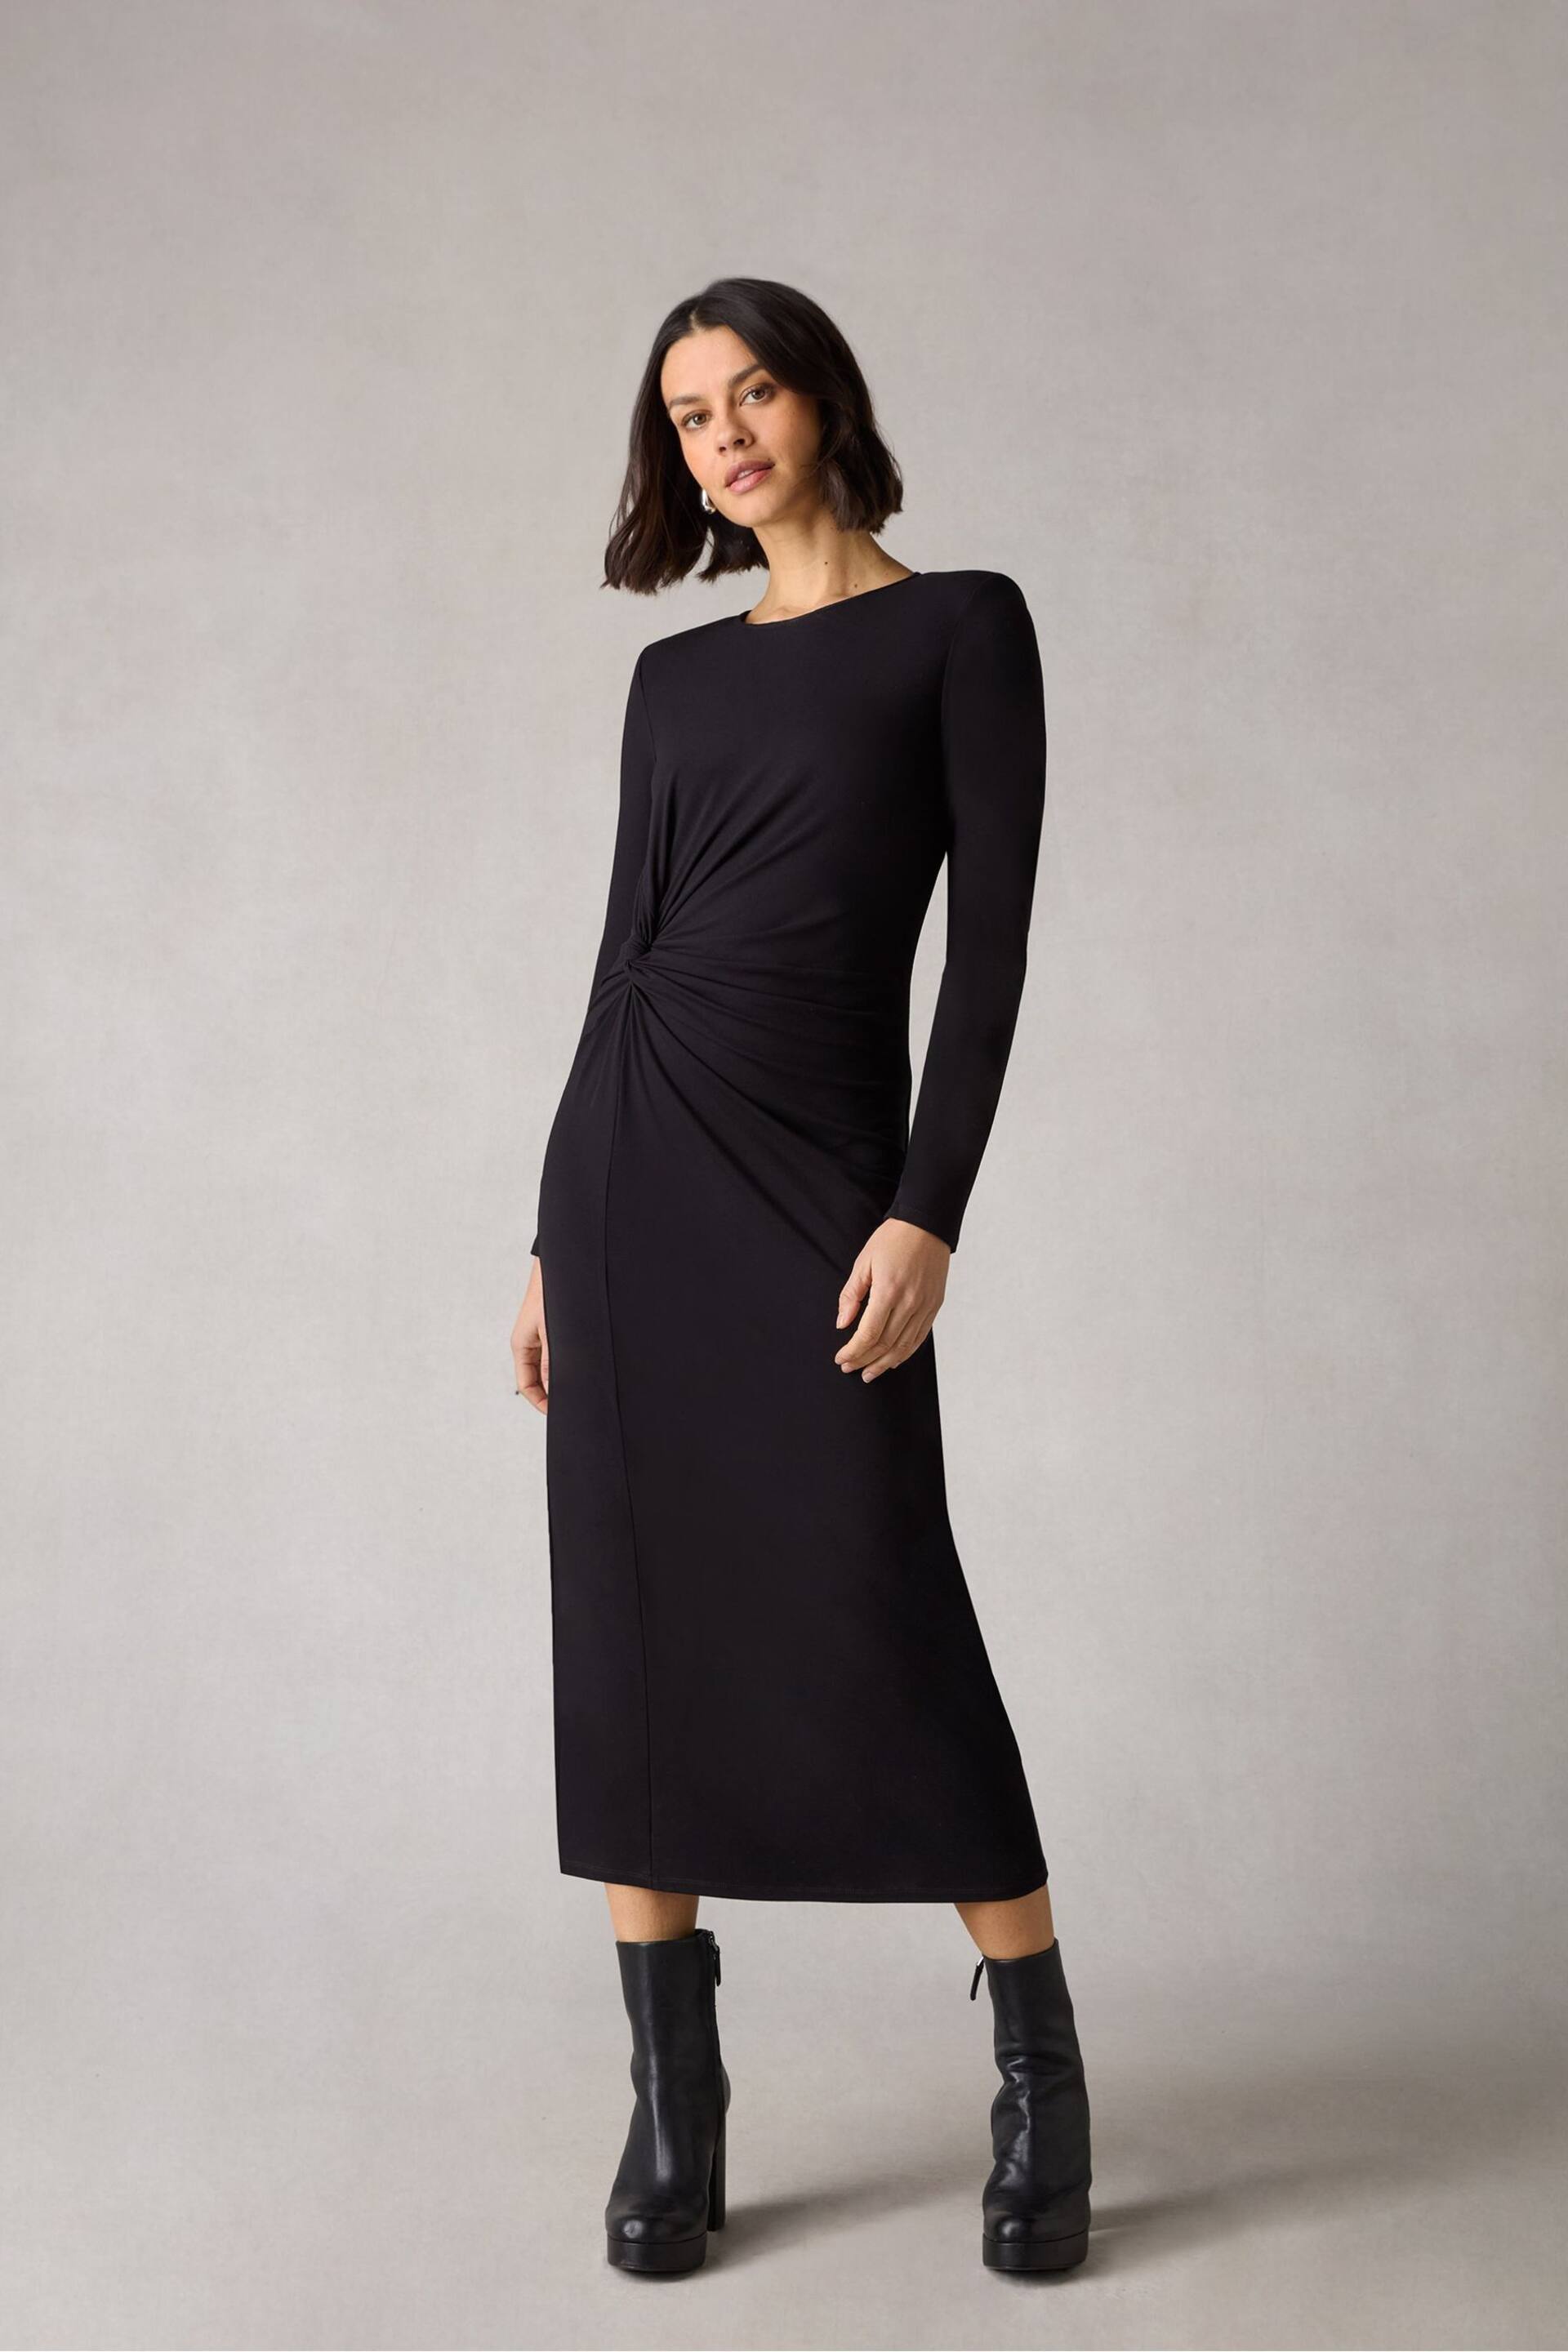 RO&Zo Petite Twist Detail Jersey Dress - Image 1 of 5